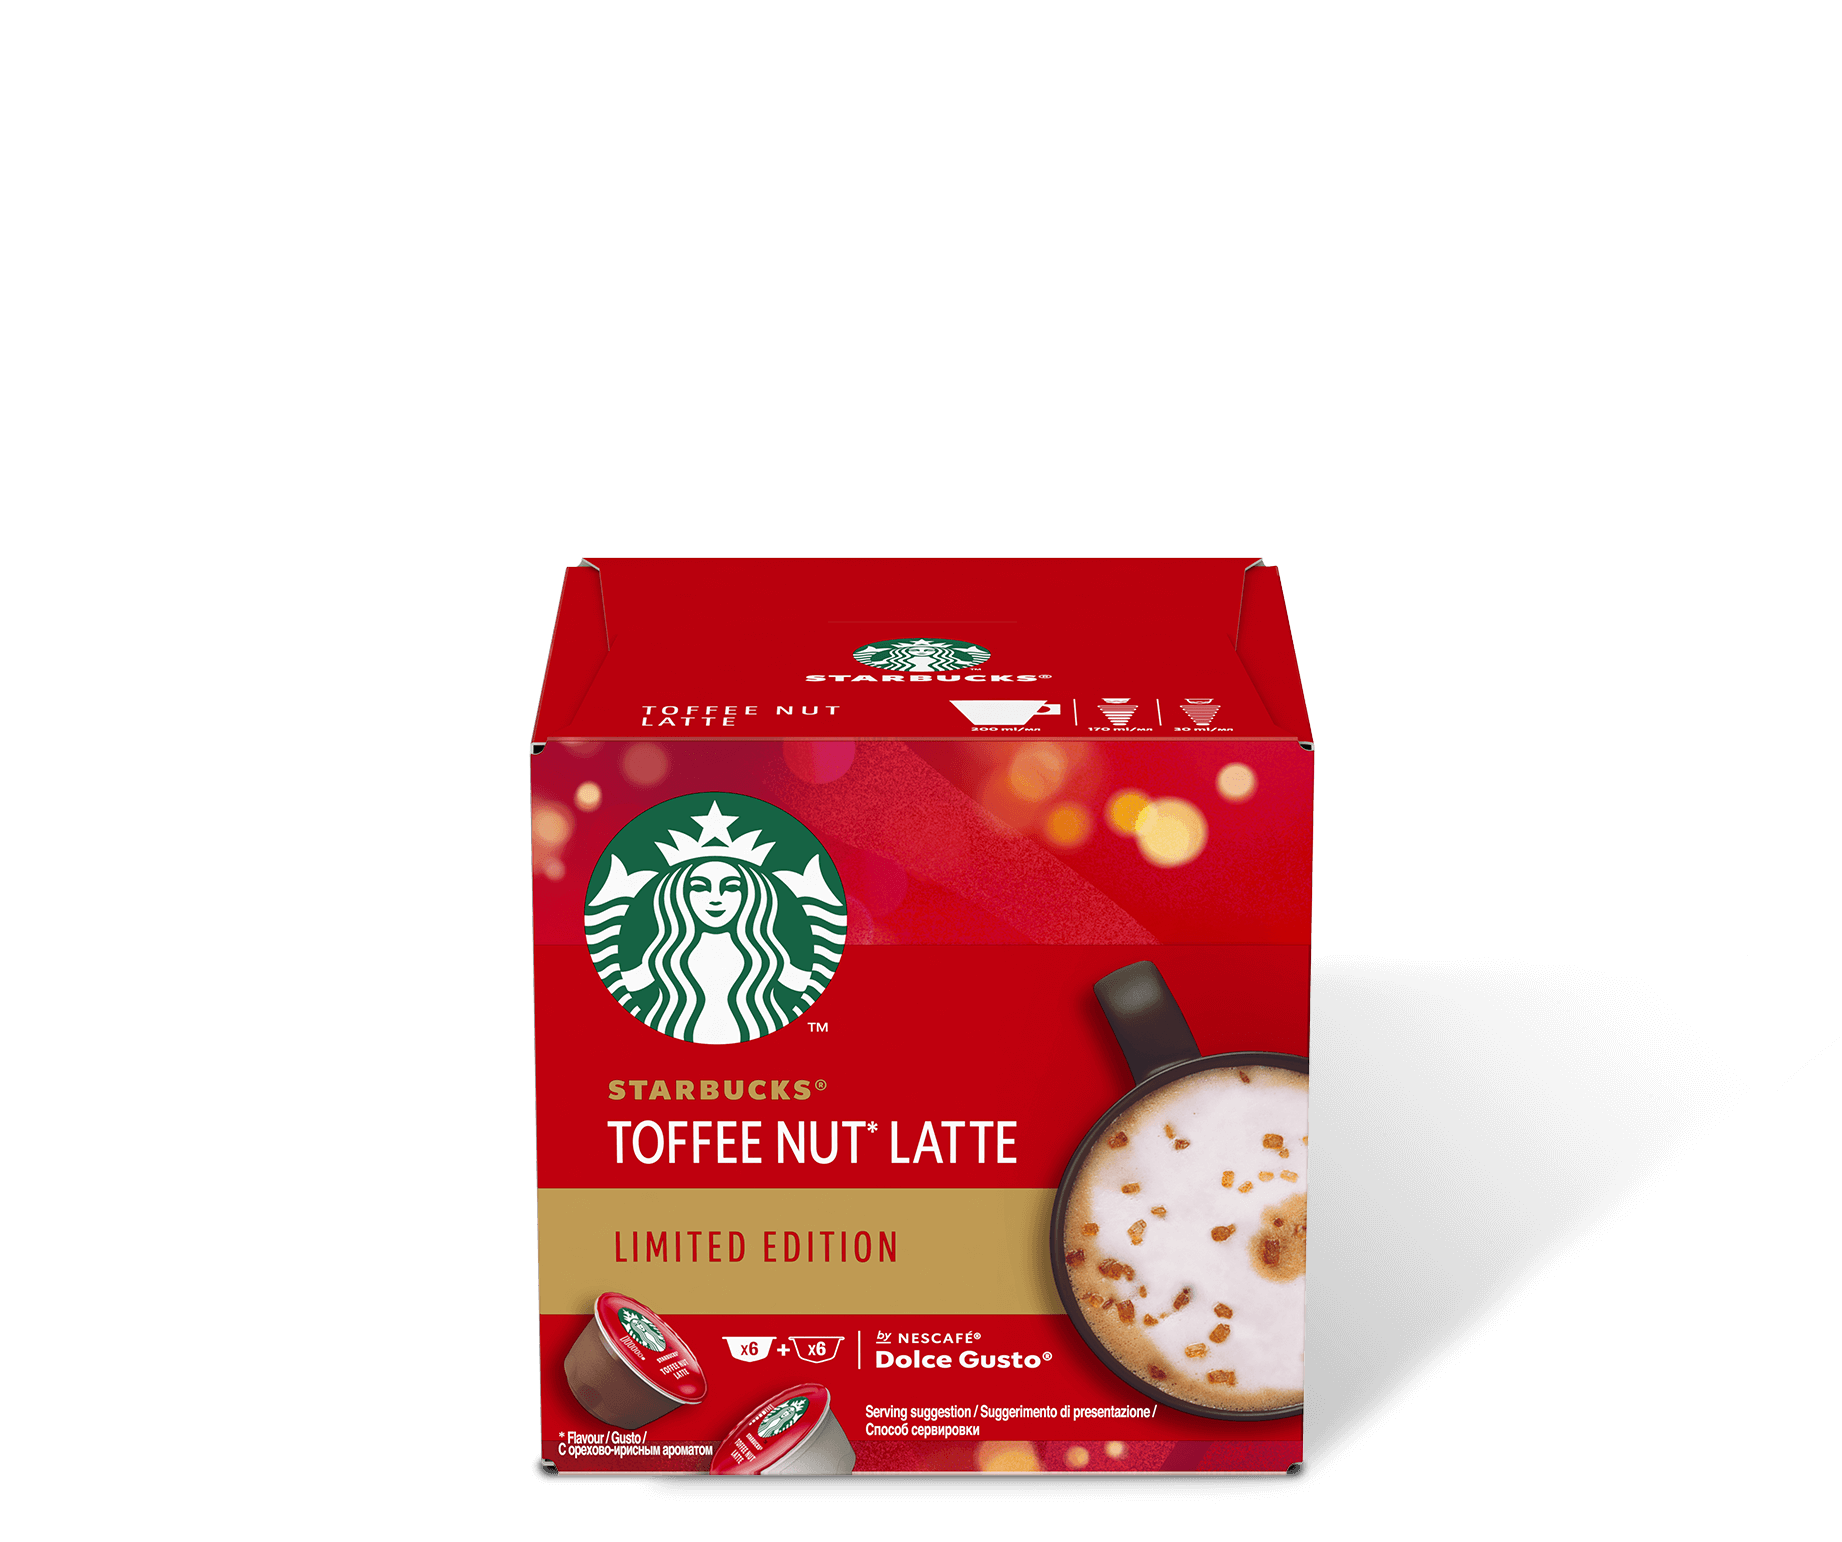 STARBUCKS® Toffee Nut Latte by NESCAFÉ® Dolce Gusto®